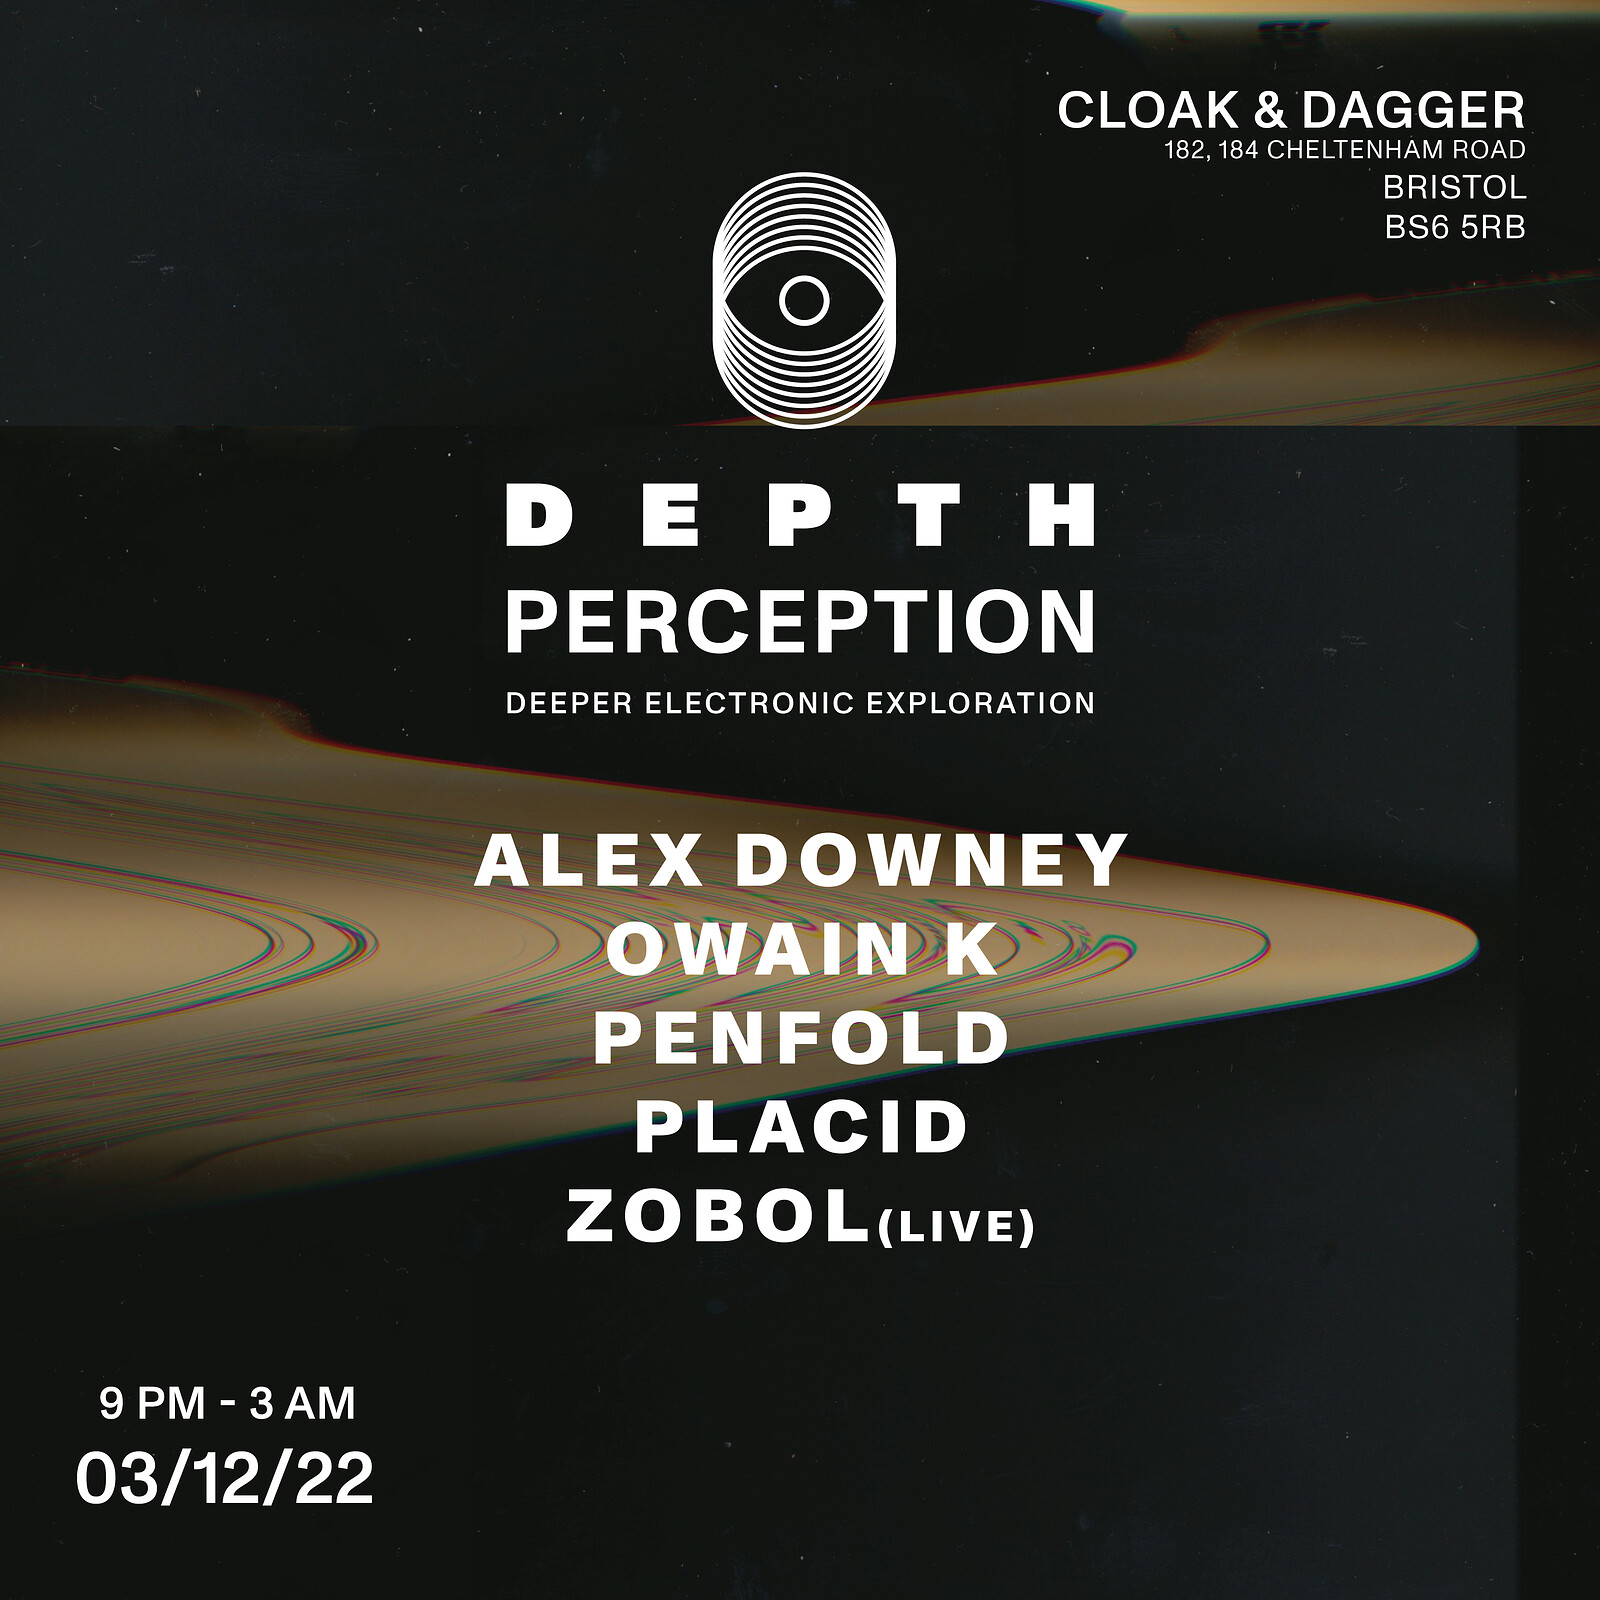 Depth Perception w/ Alex Downey at The Cloak and Dagger